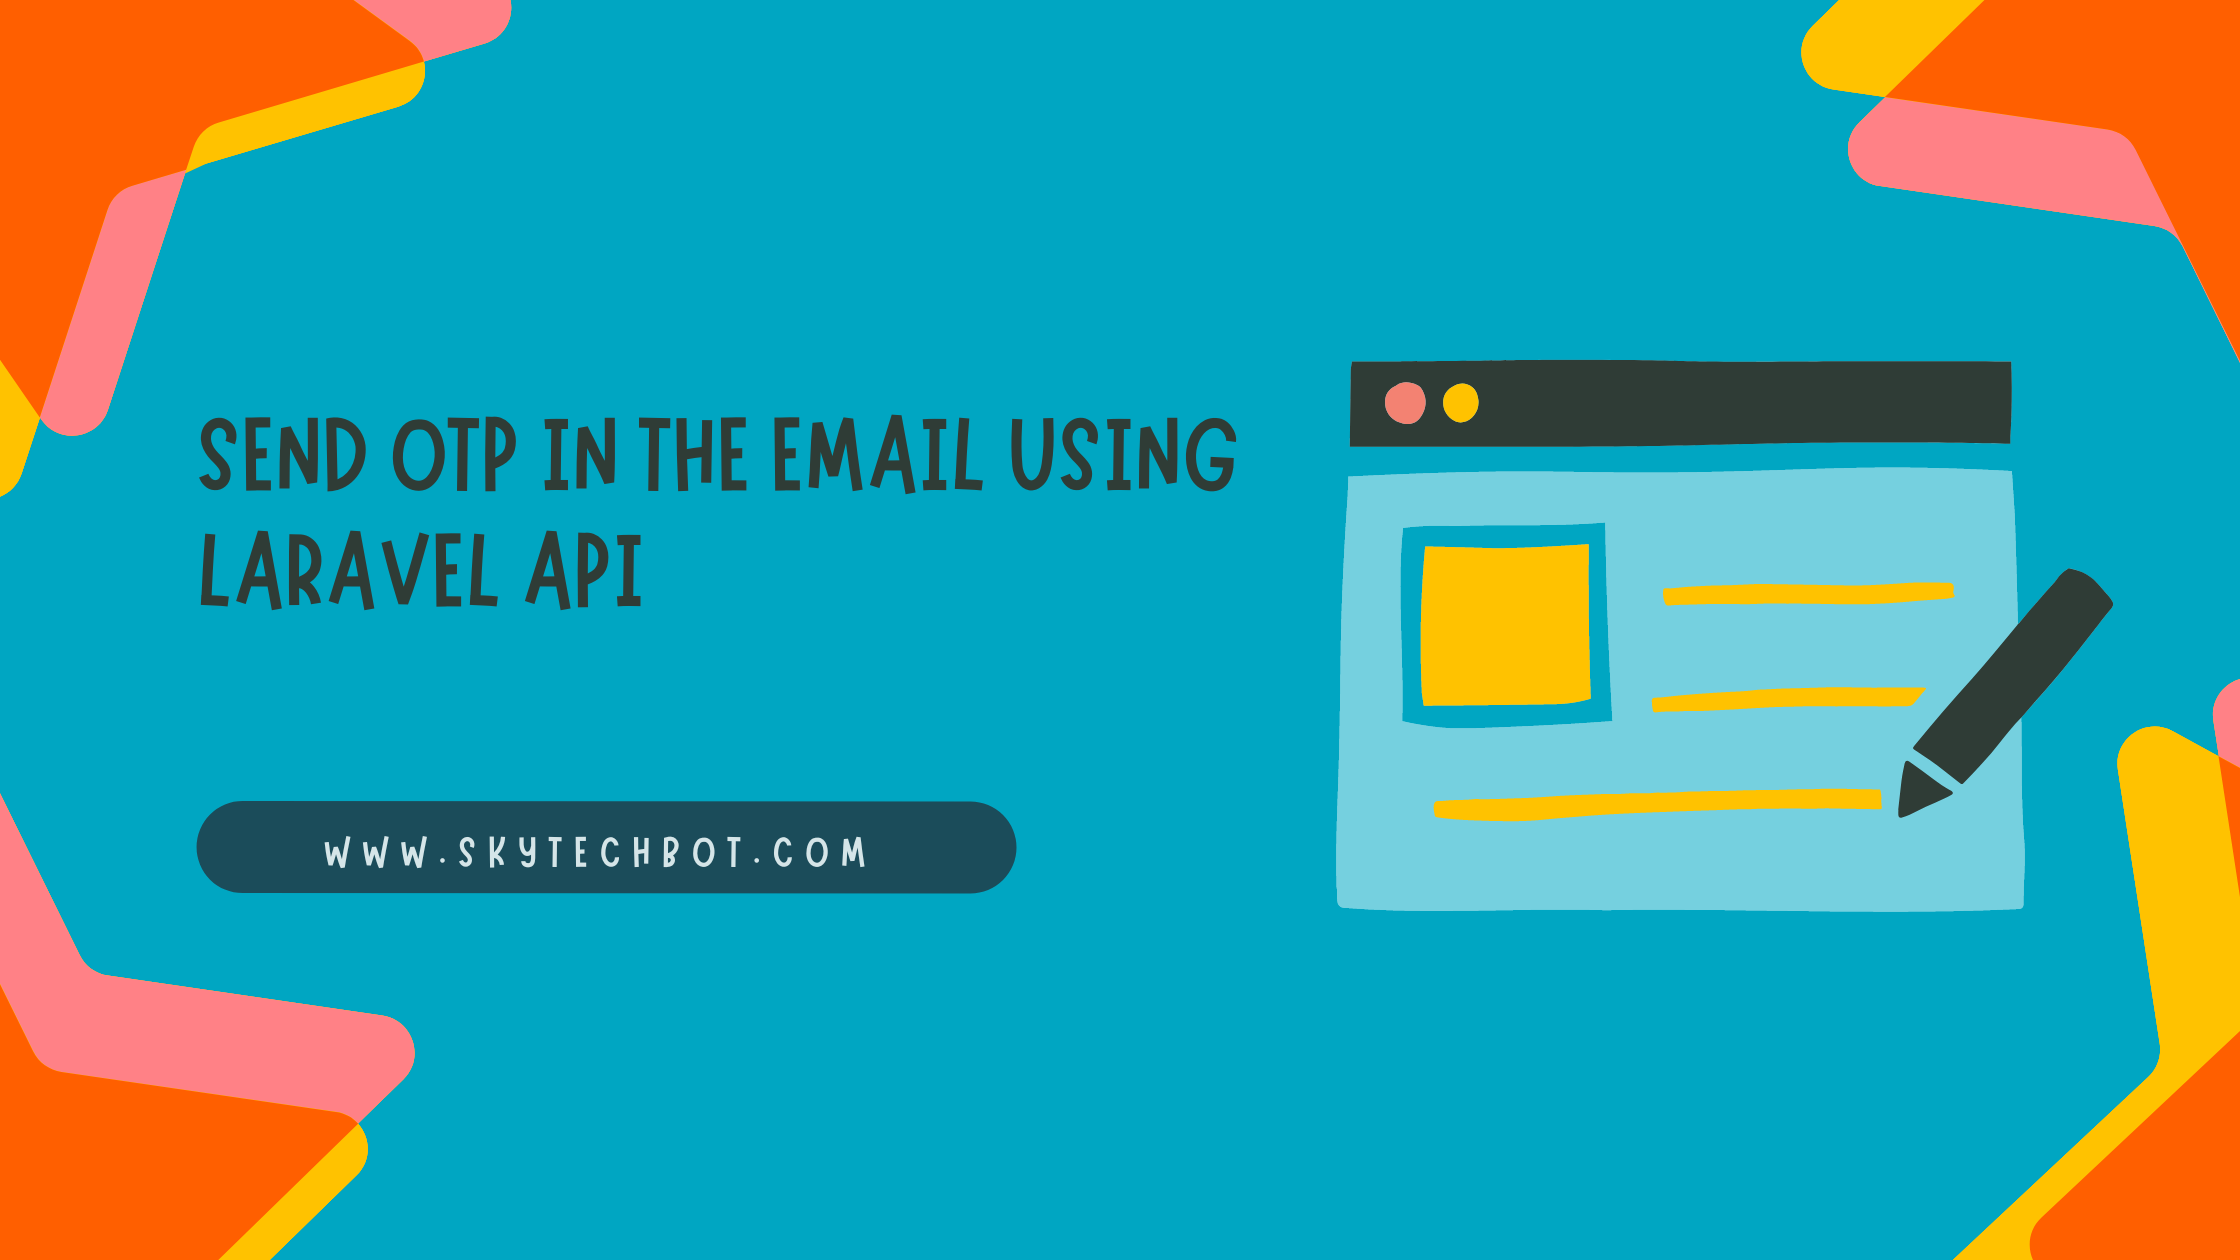 Send OTP in the email using Laravel API